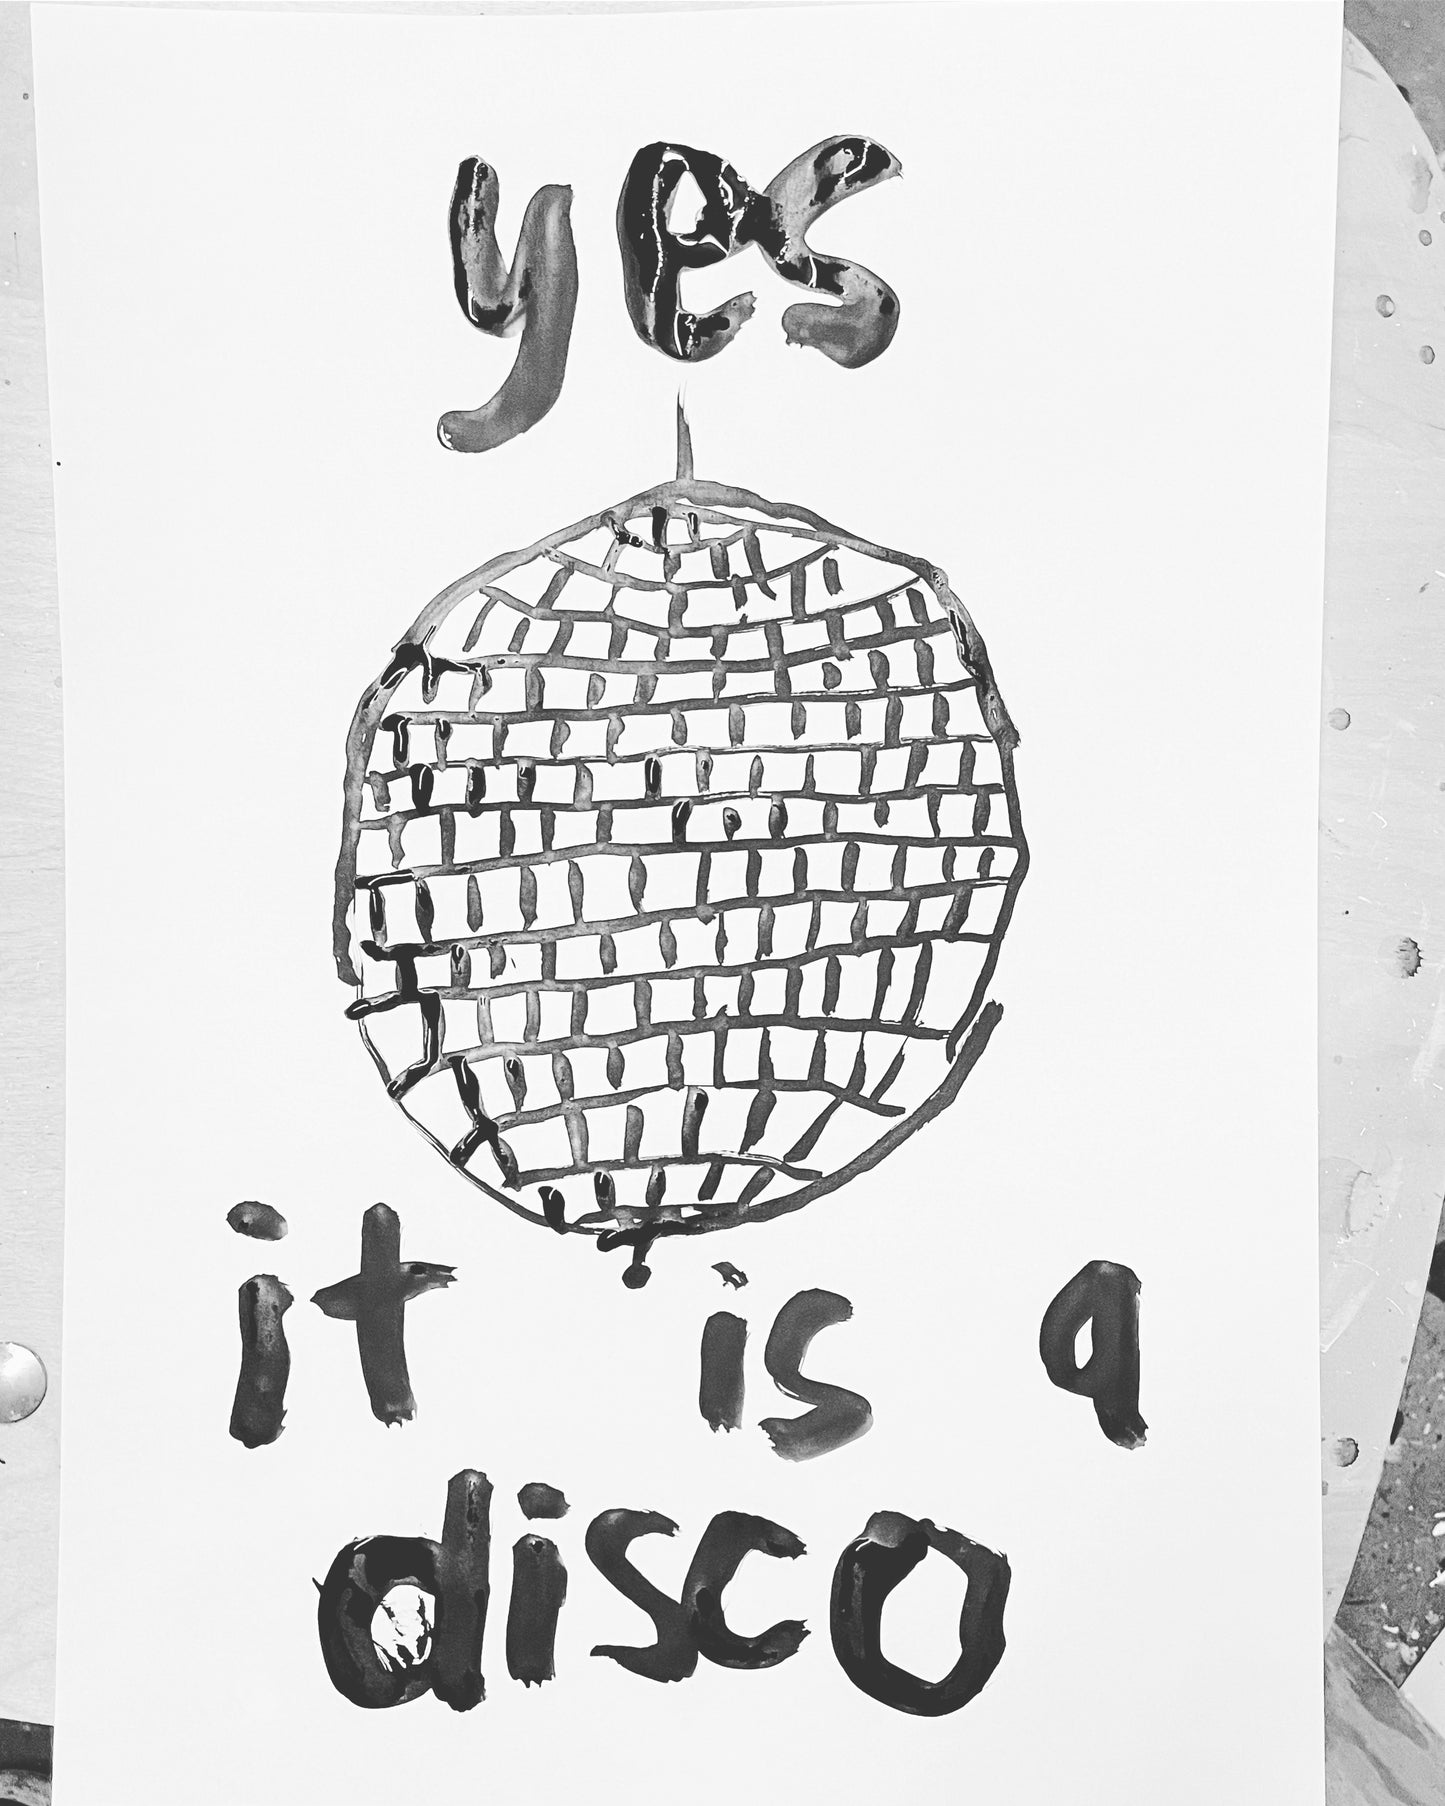 Yes it is a Disco